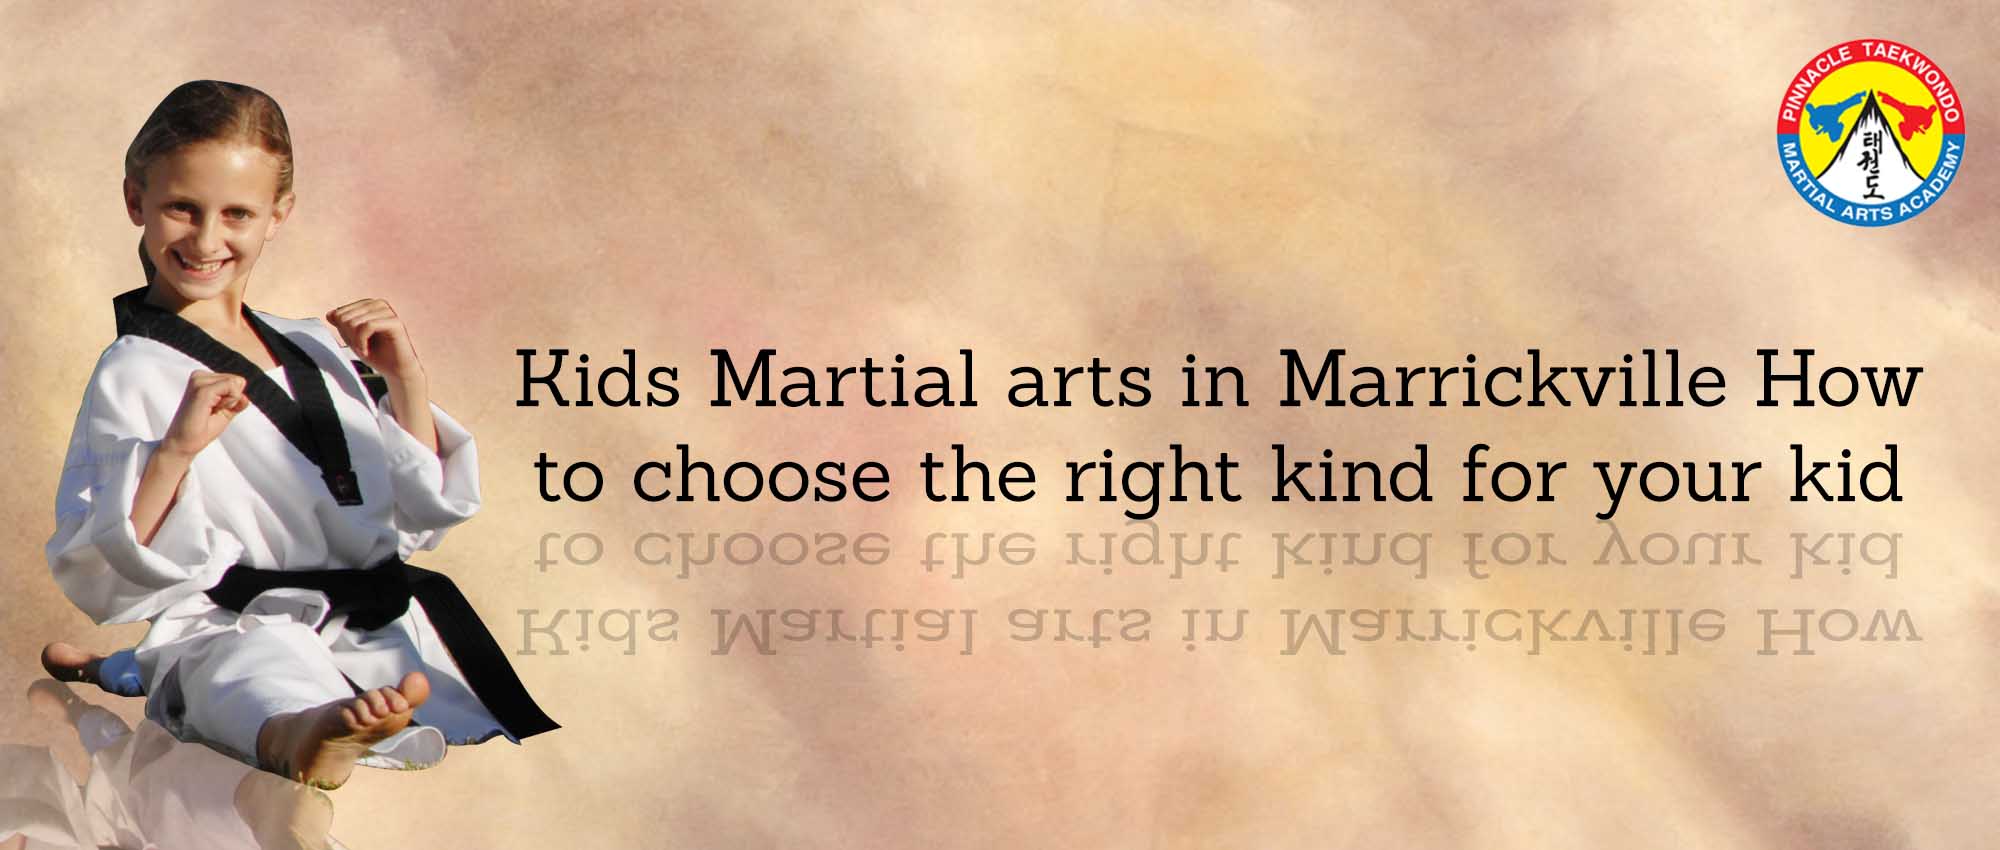 Kids-Martial-arts-in-Marrickville